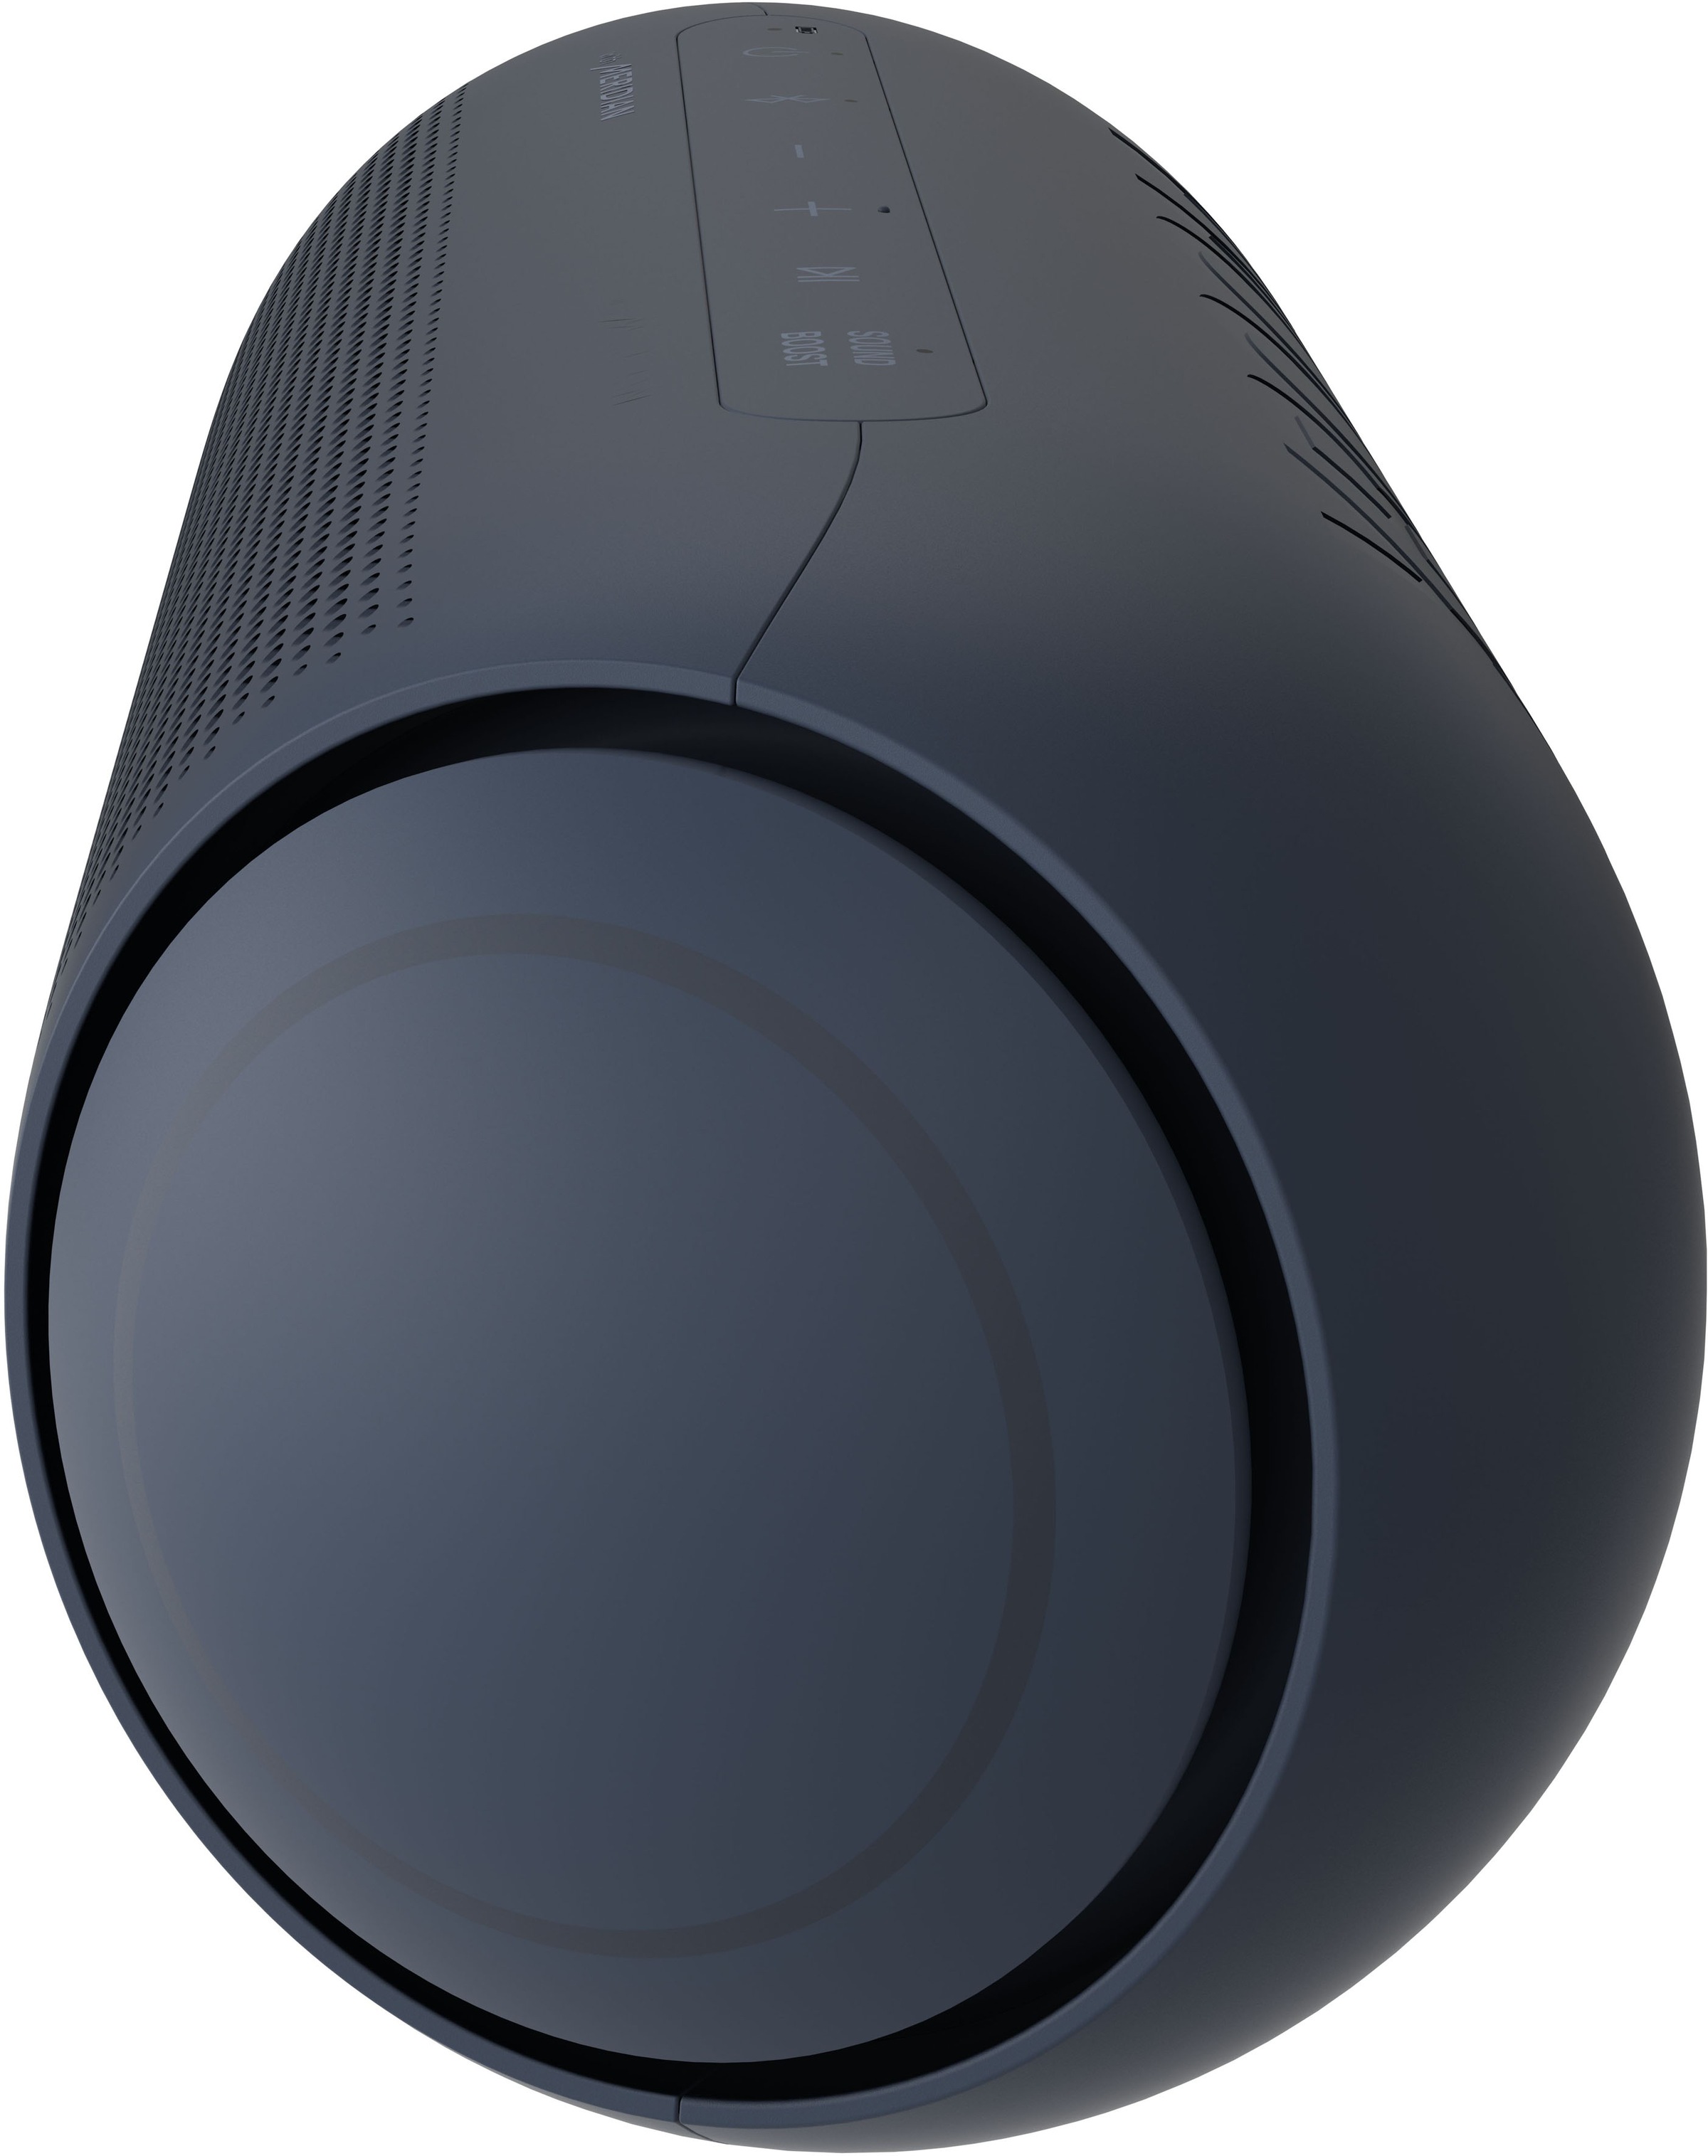 LG Bluetooth-Lautsprecher »XBOOM Go PL7«, Multipoint-Anbindung